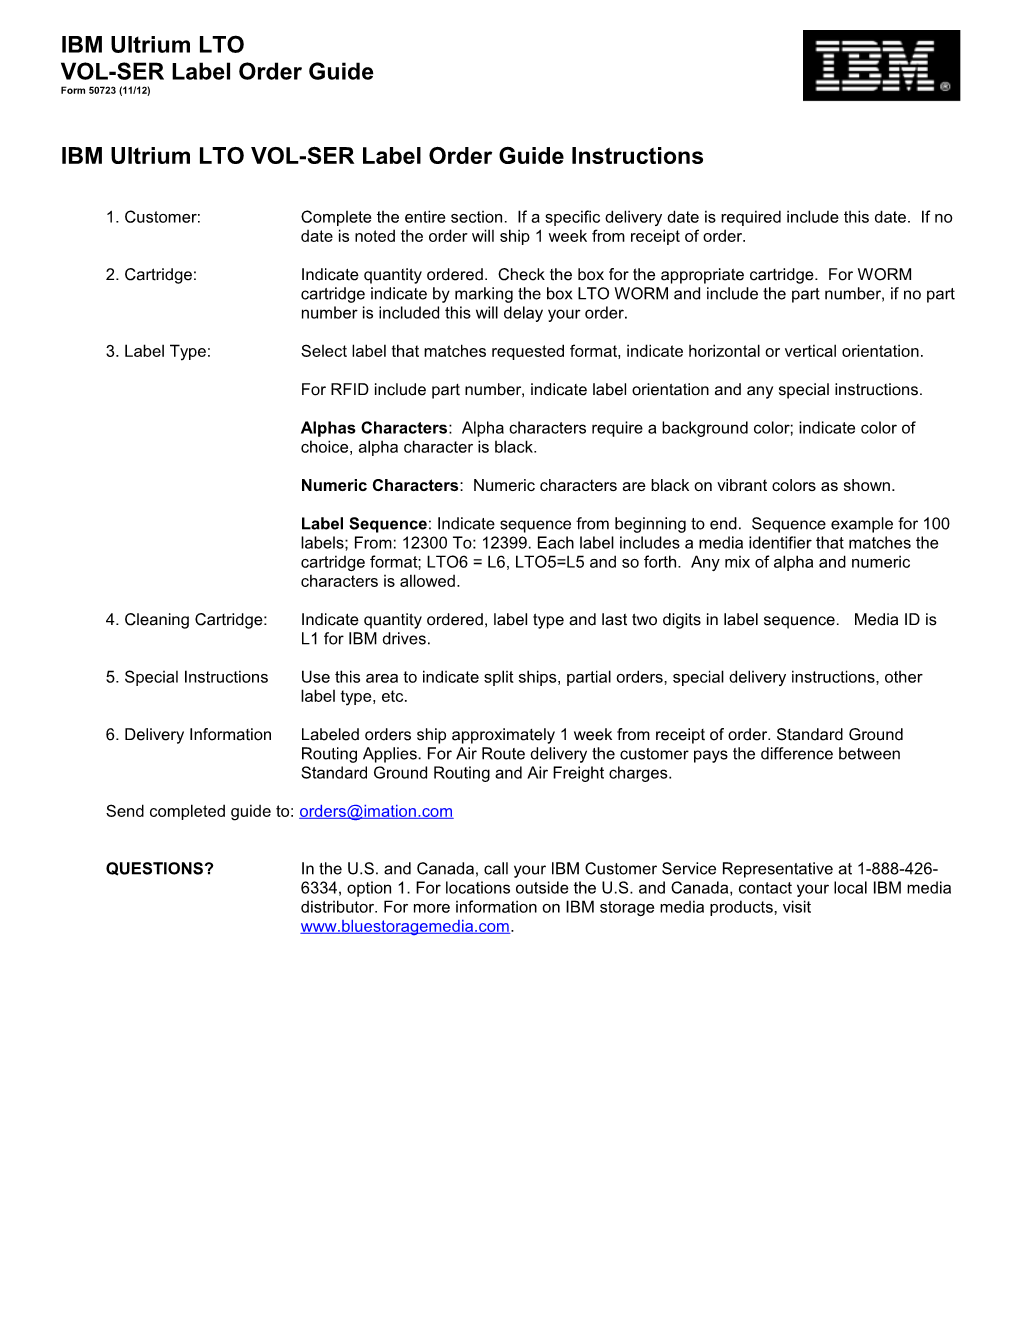 IBM Ultrium LTO VOL-SER Label Order Guide Instructions